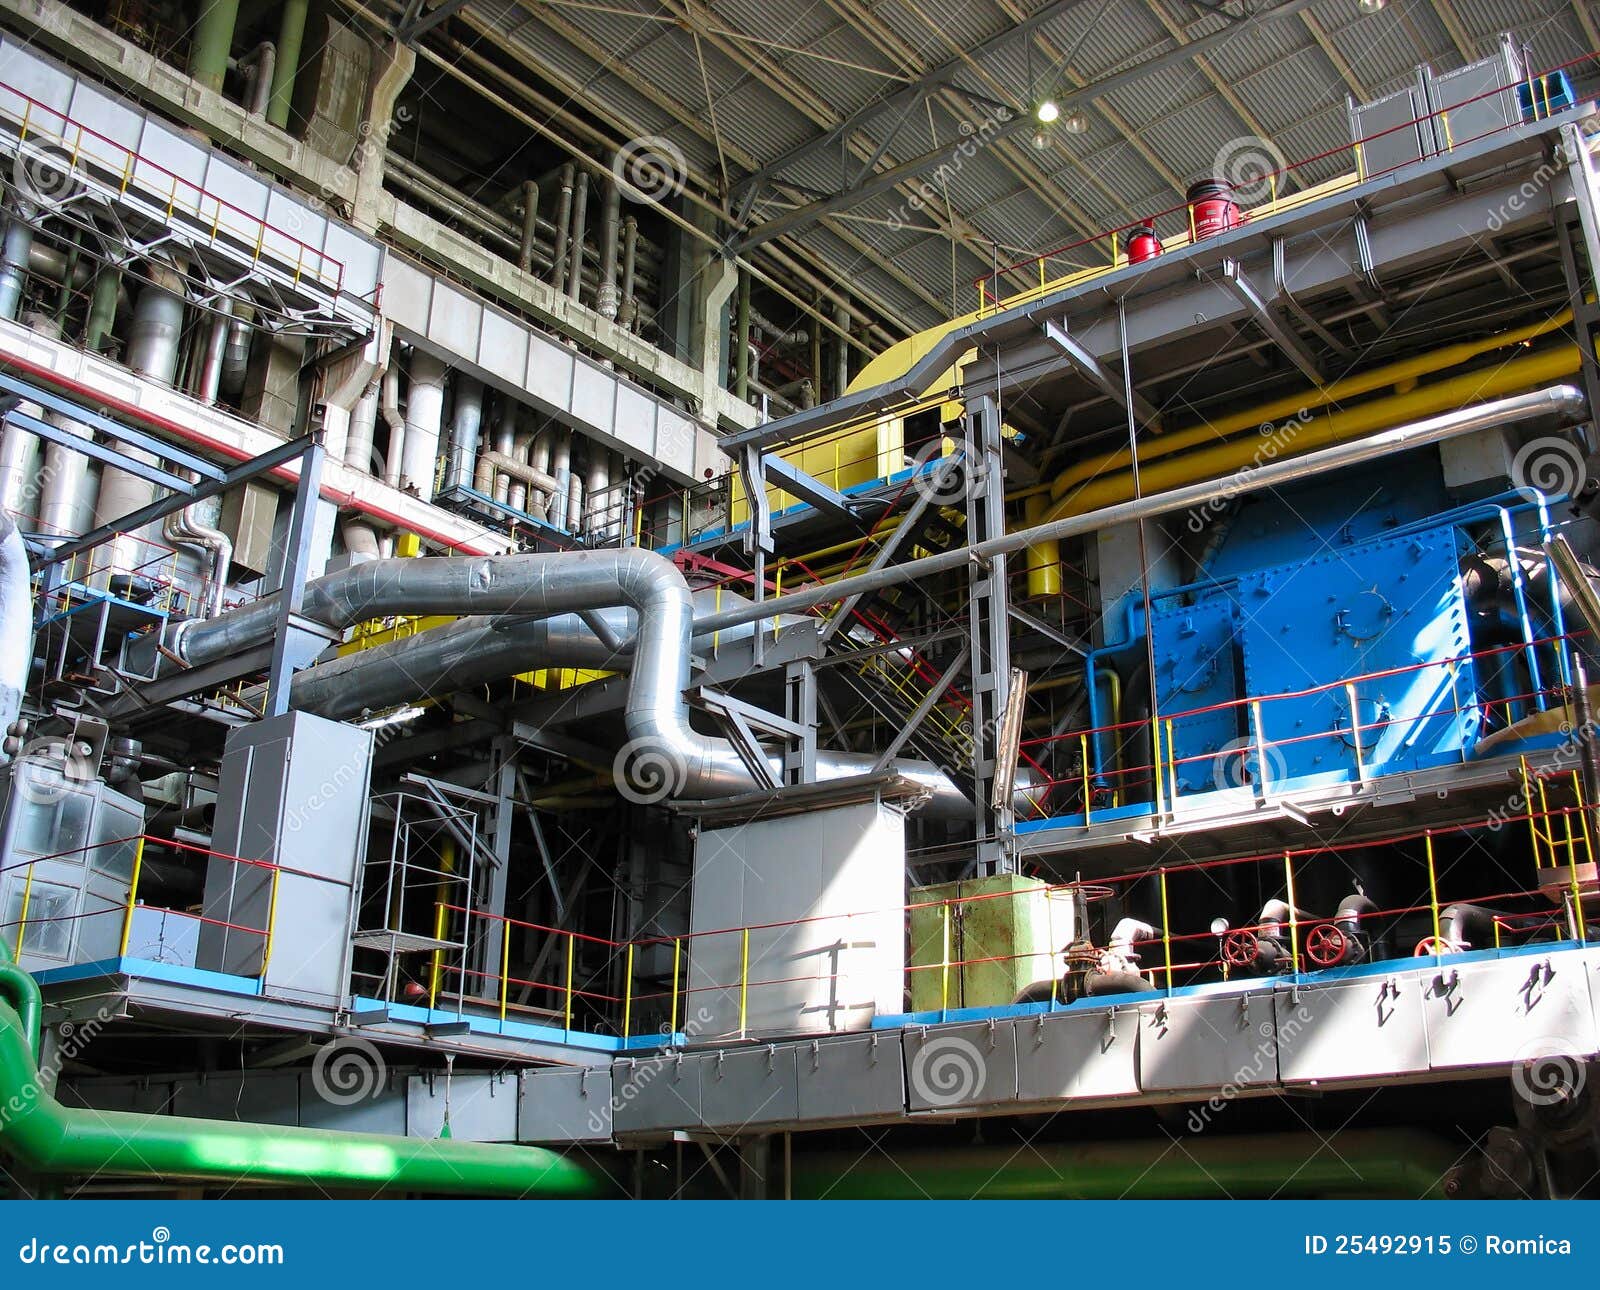 steam turbine power plant pdf